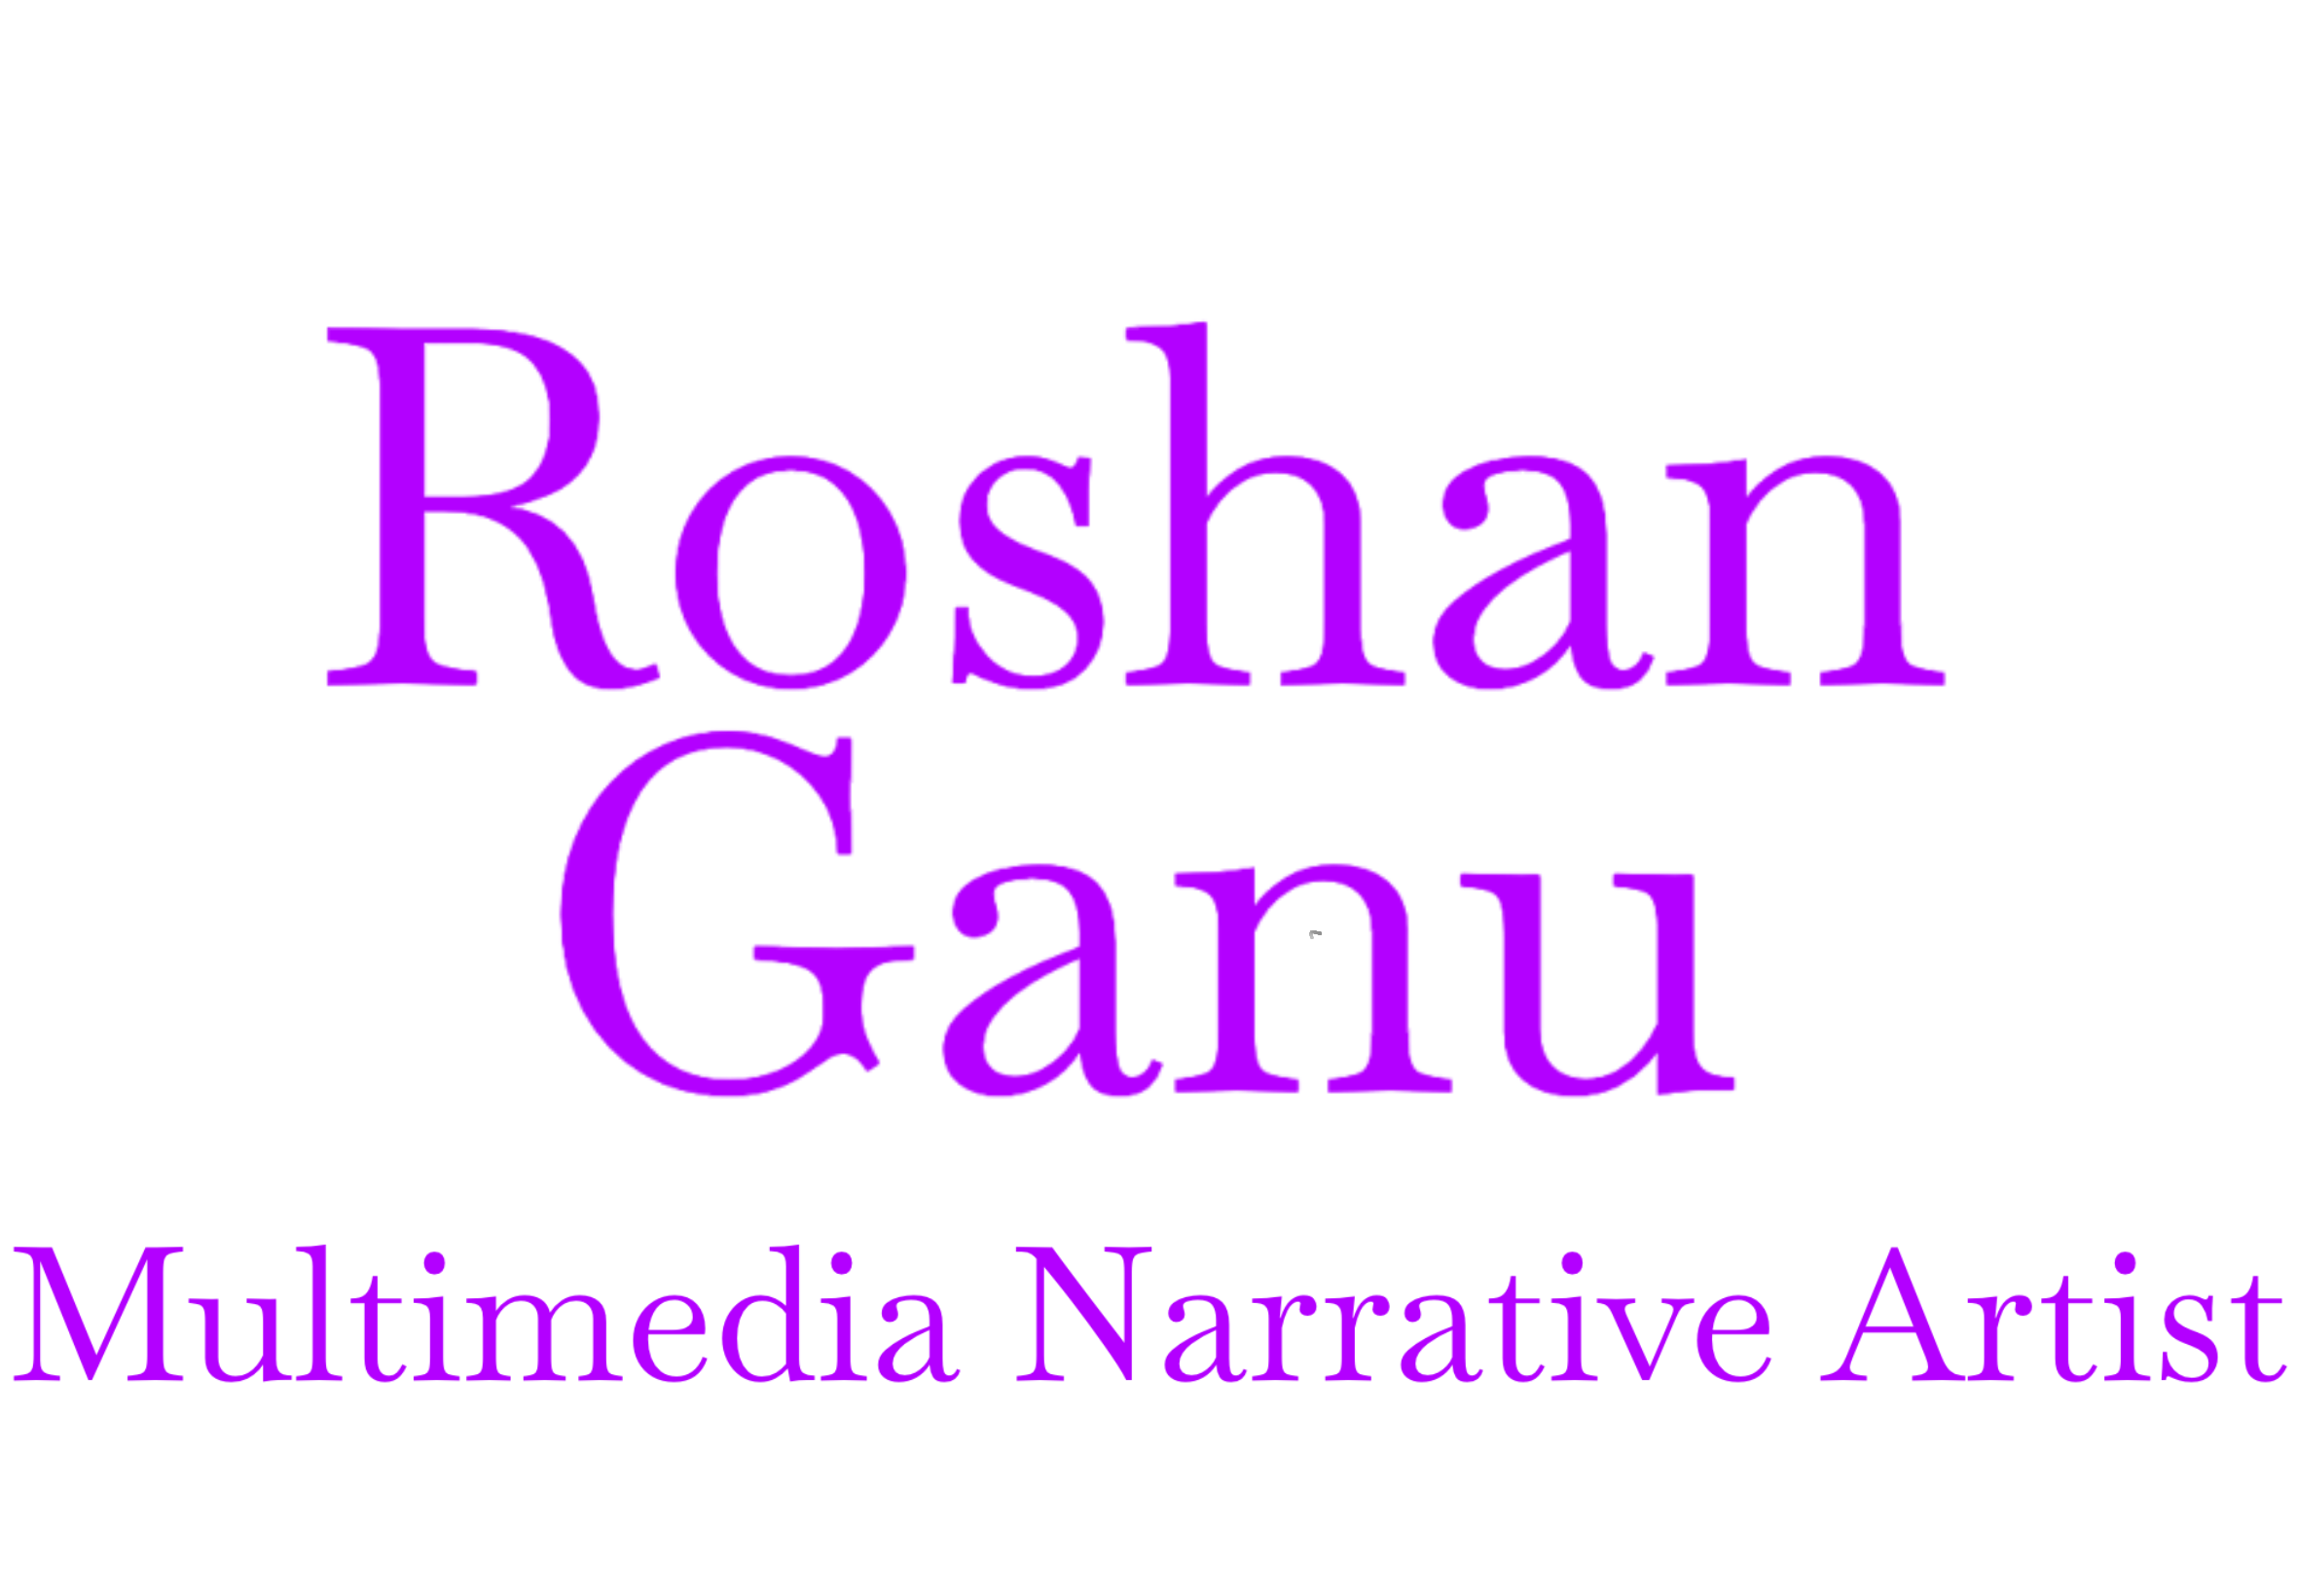 Roshan Ganu, Multimedia Narrative Artist